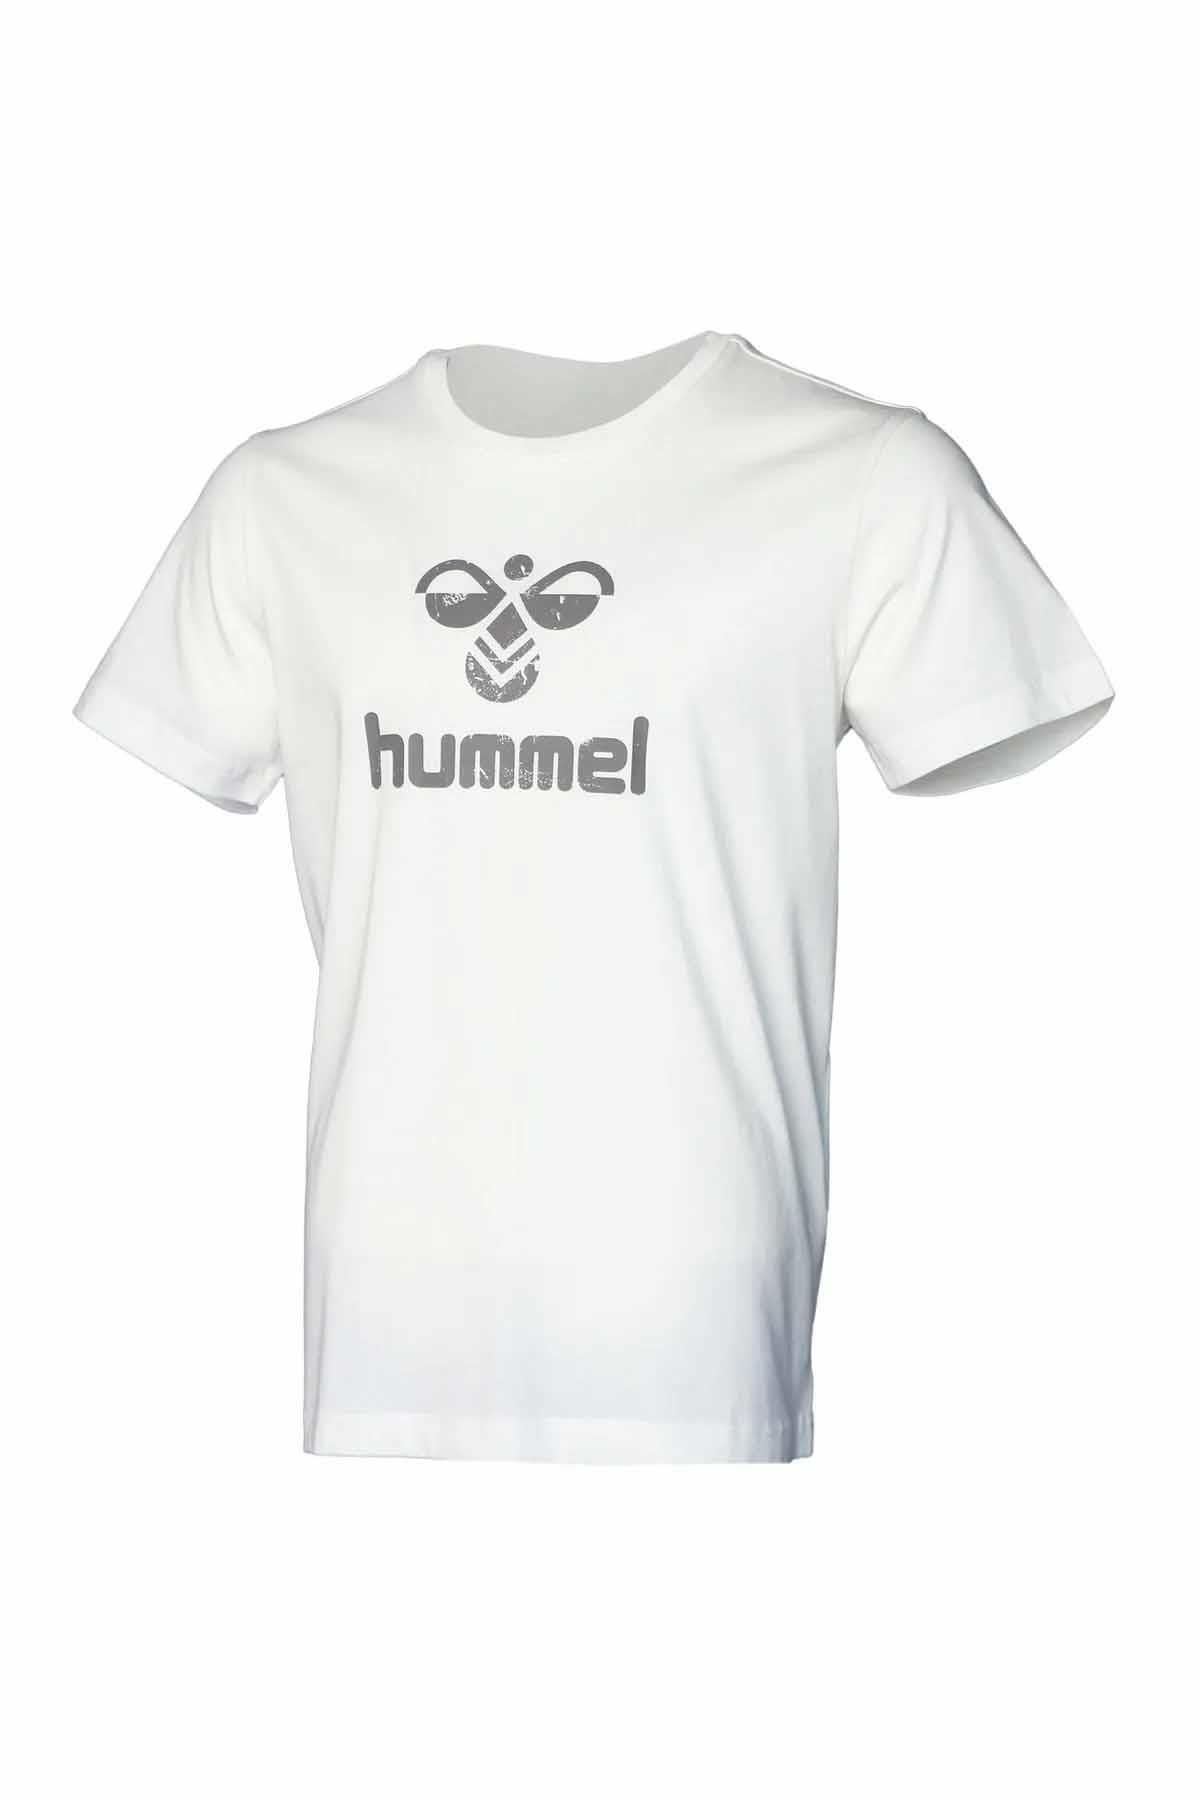 hummel تی شرت لئونا S/S مردان 911667-9003OFF چه کسی